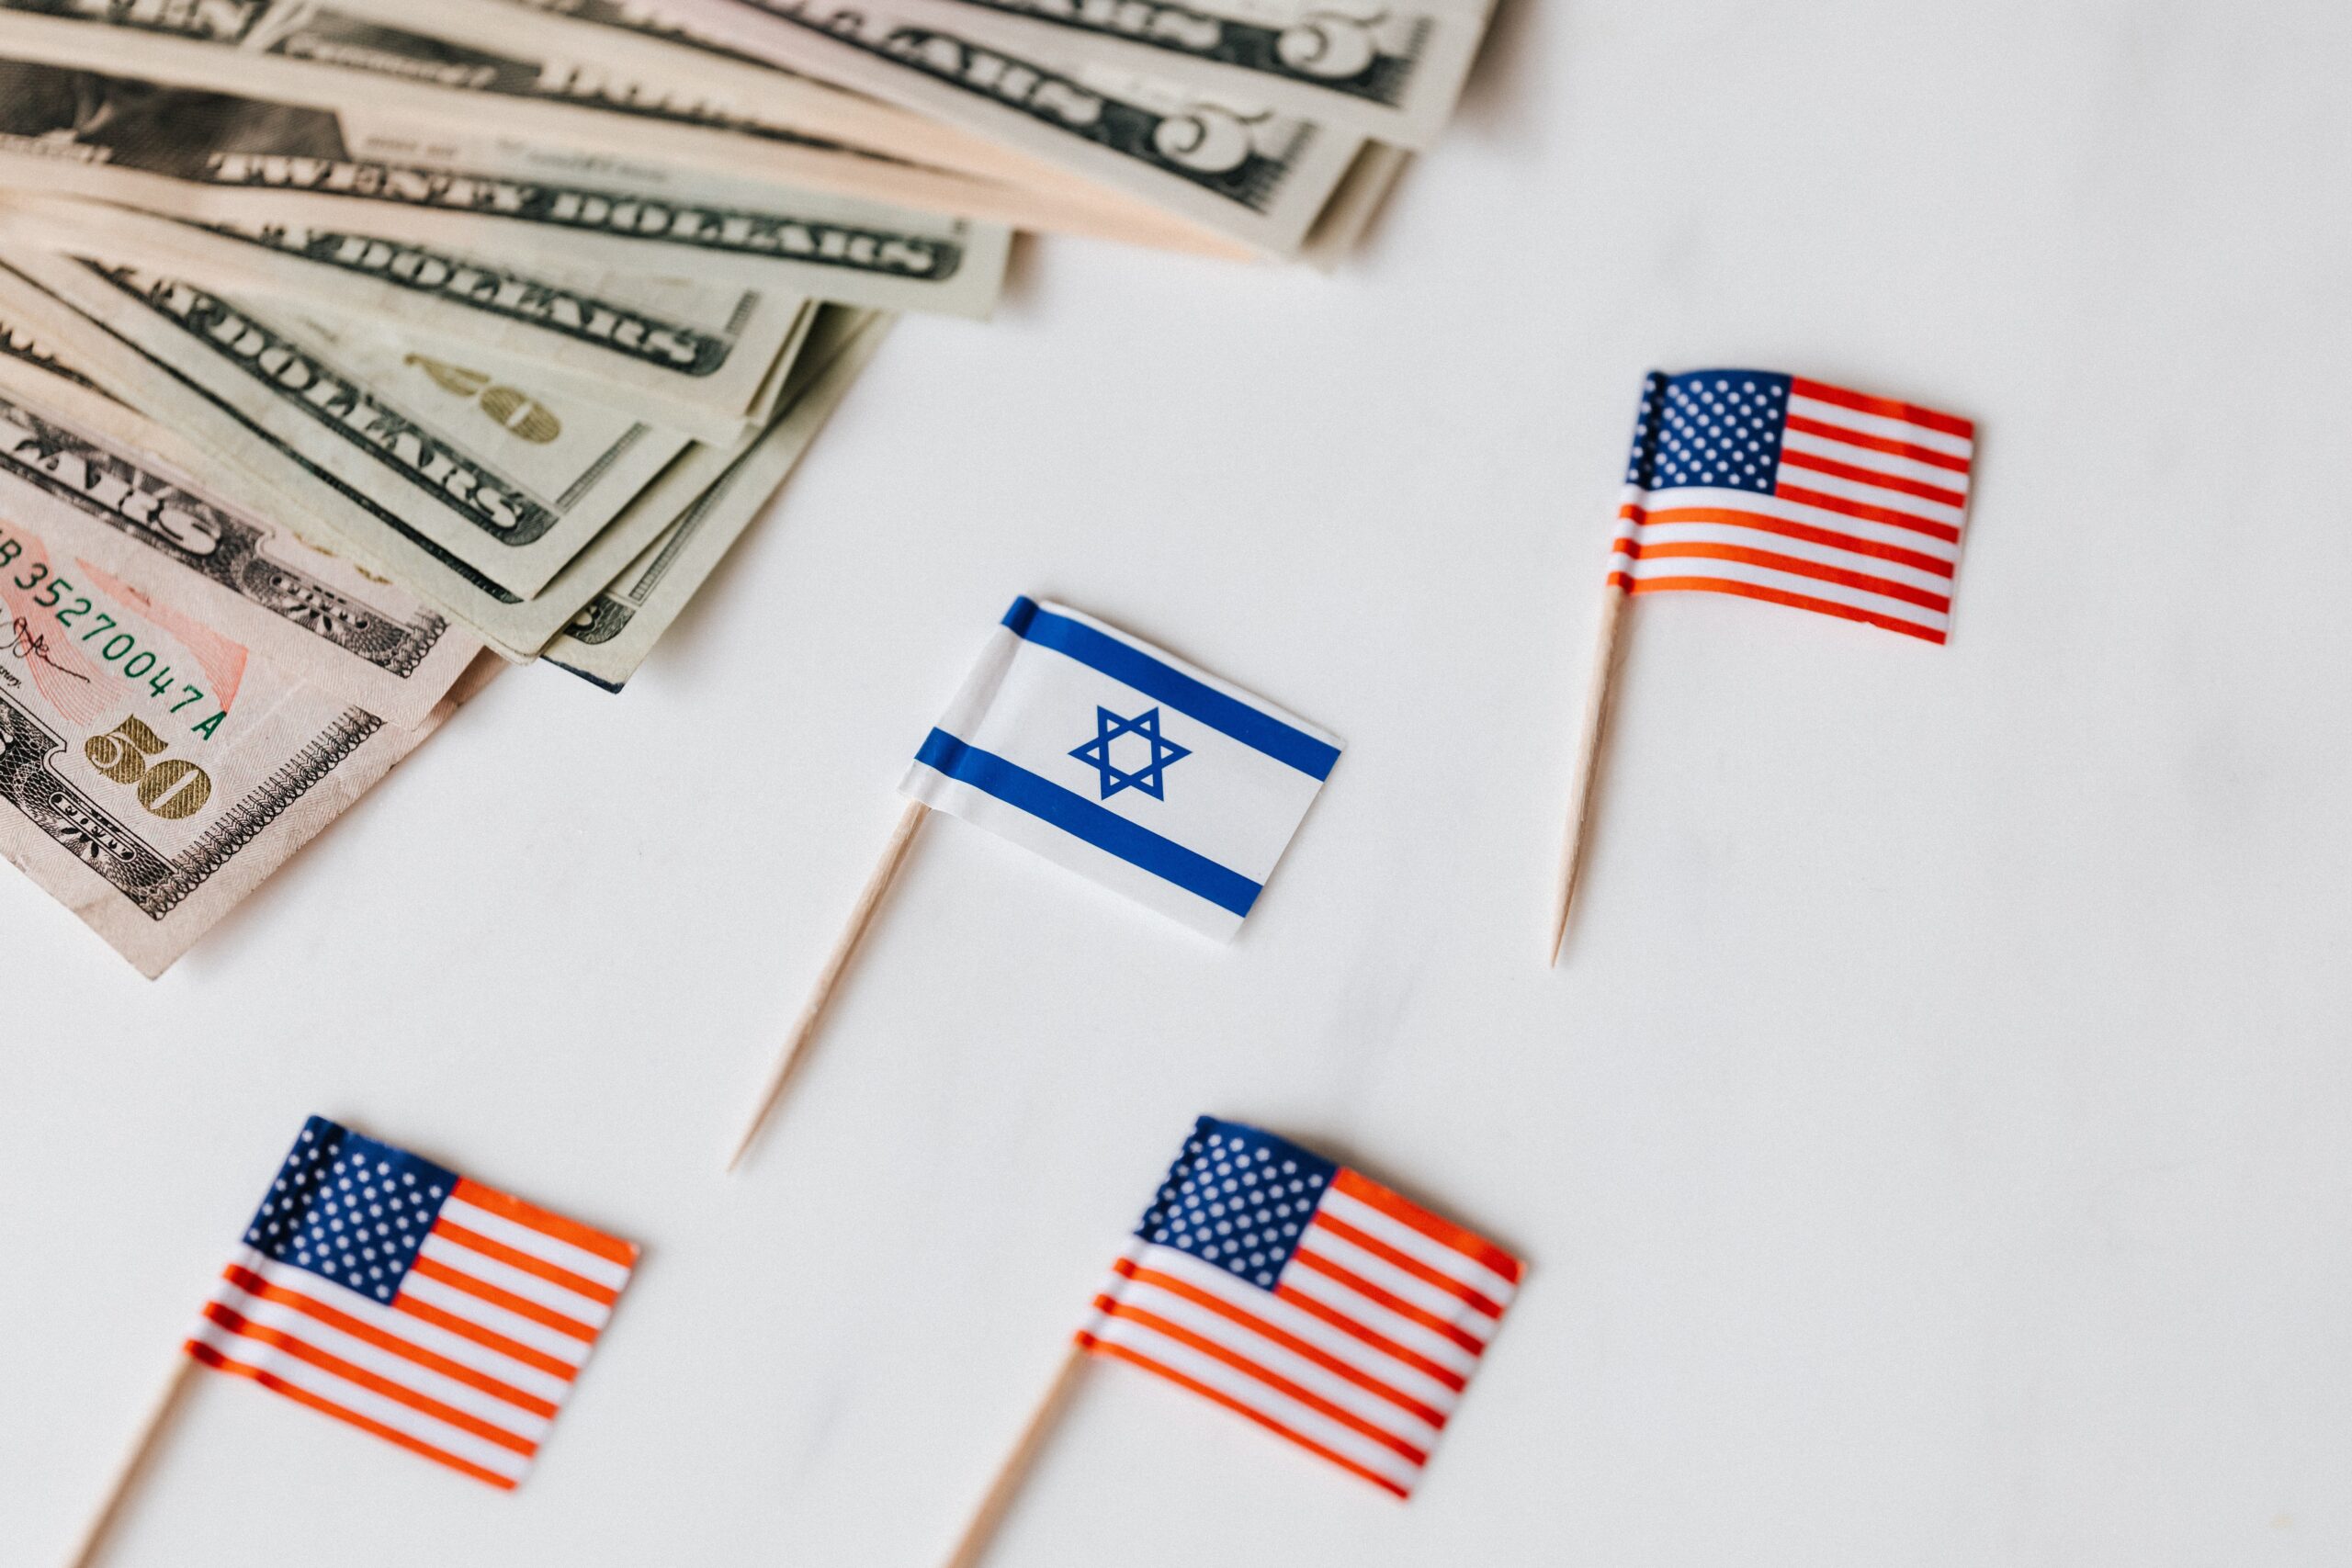 American and Israeli flags near US dollar bills